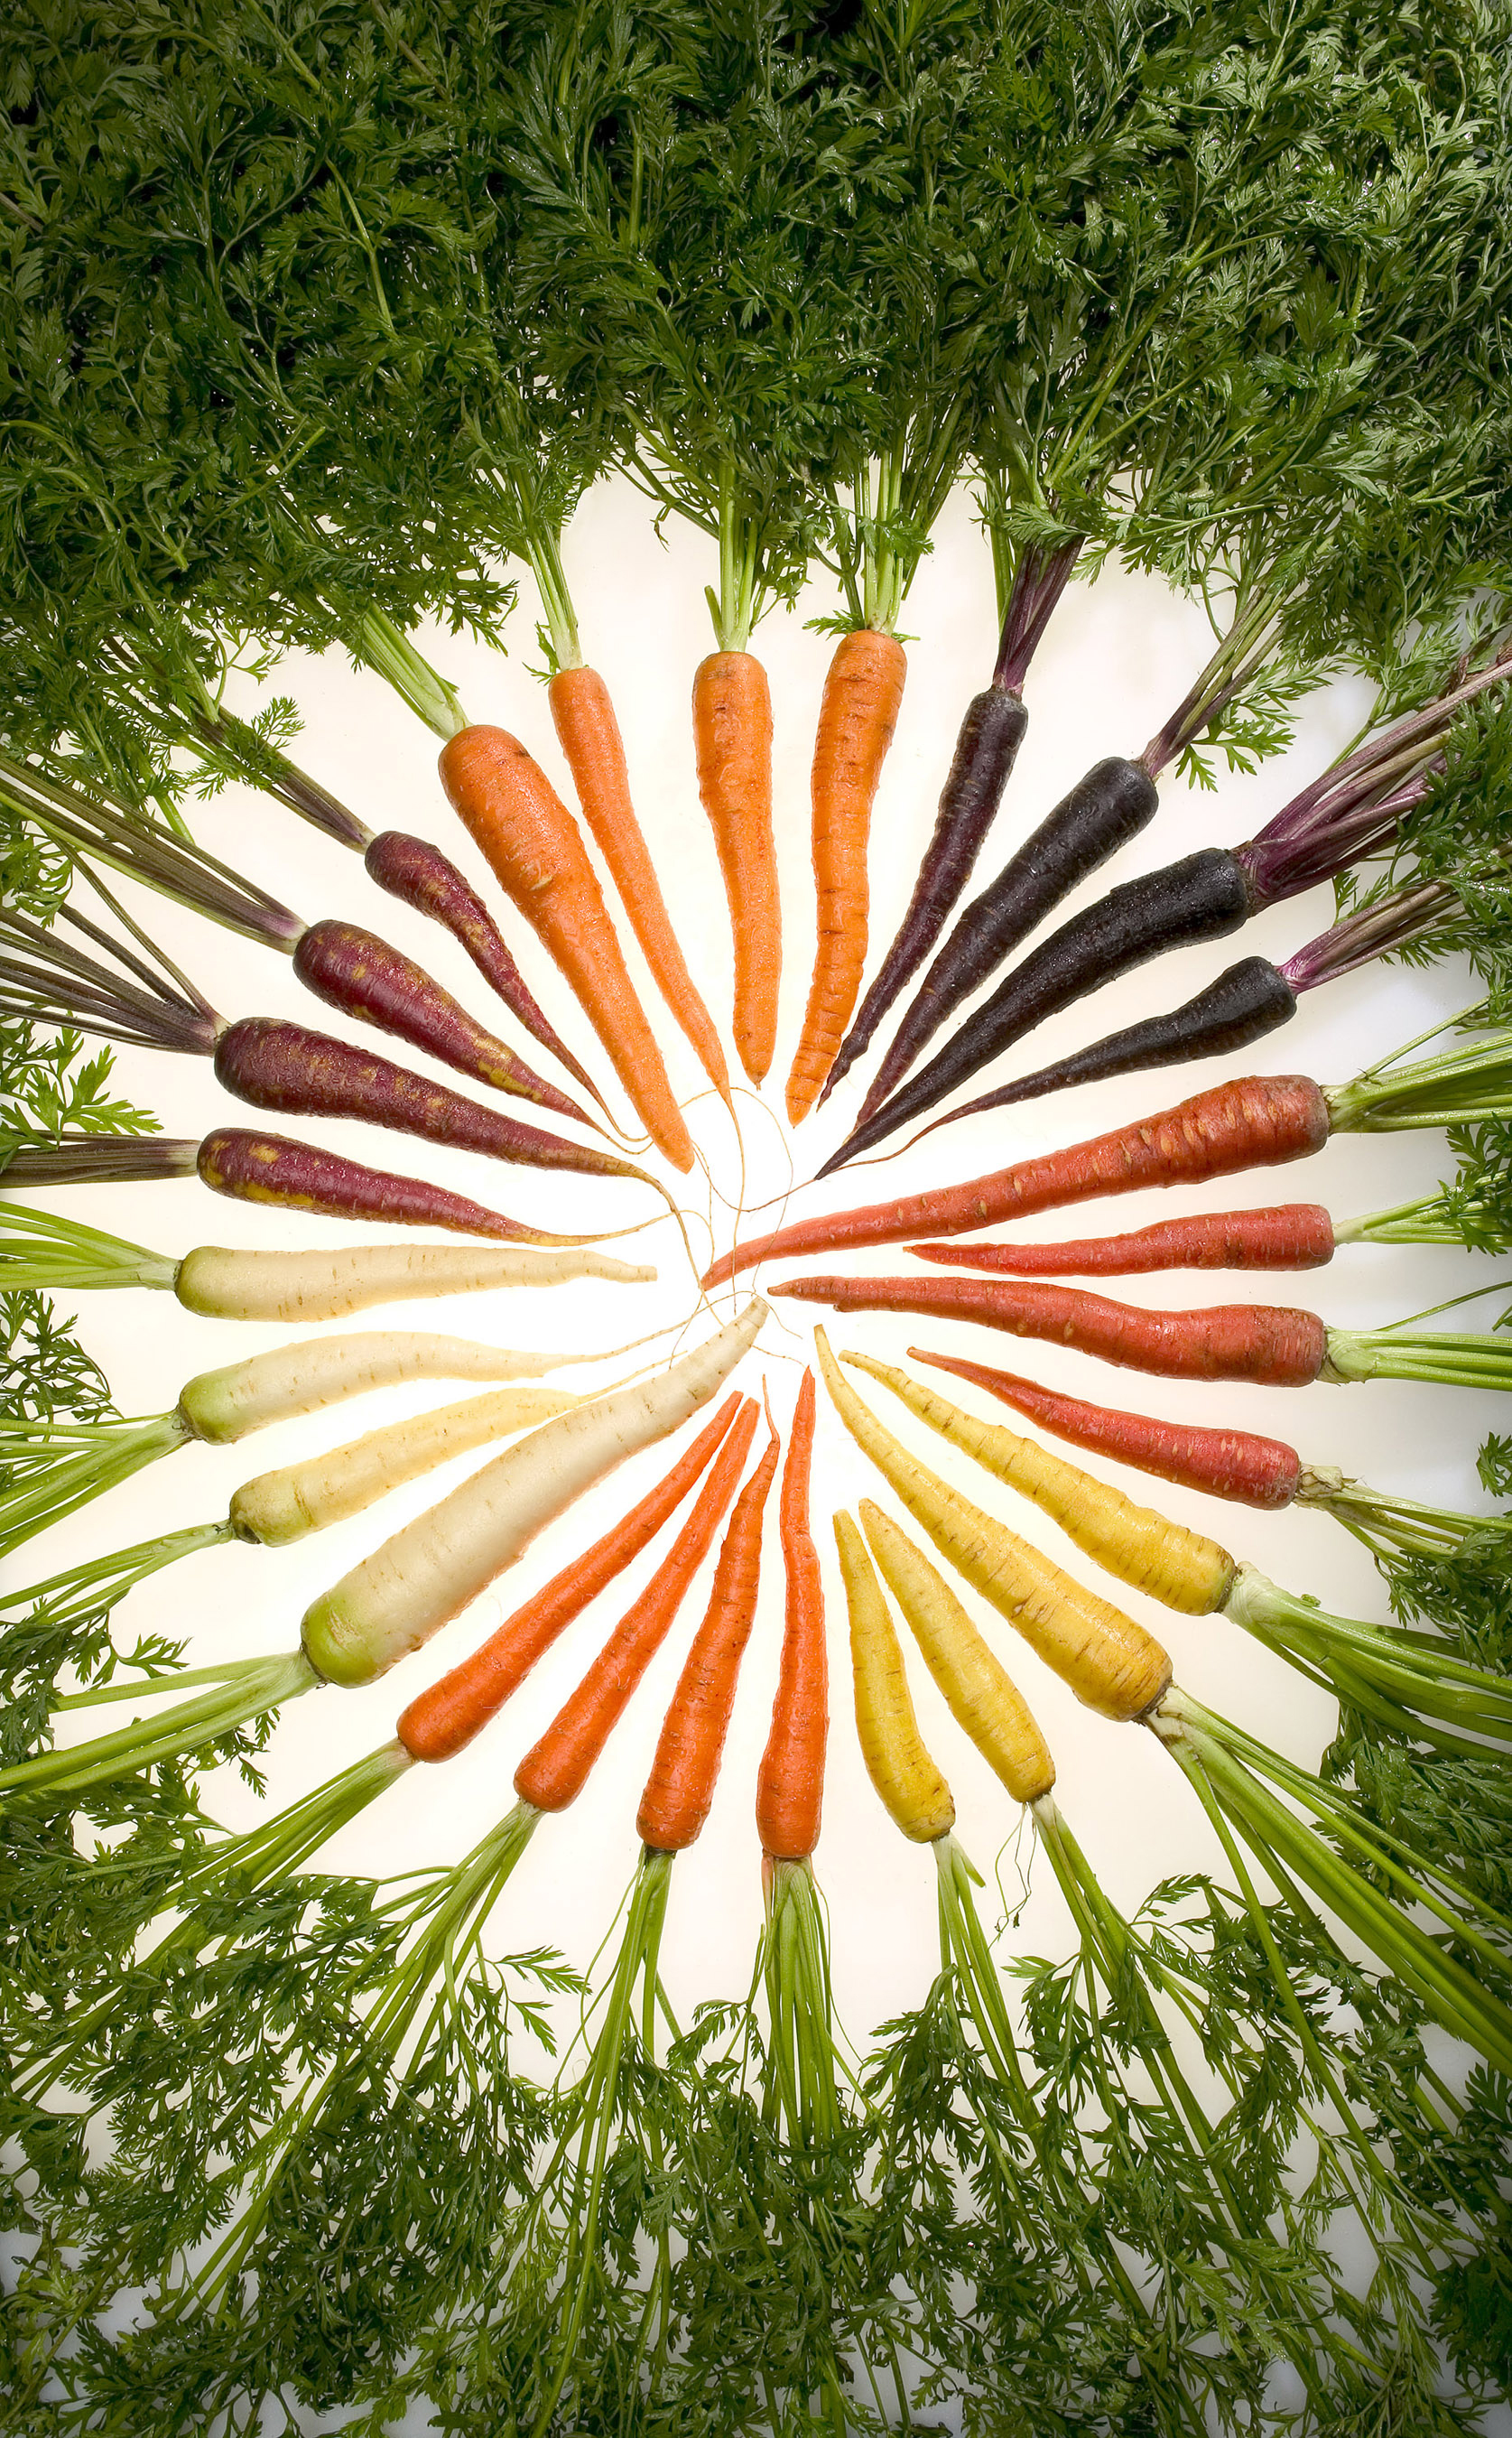 carrots.jpg